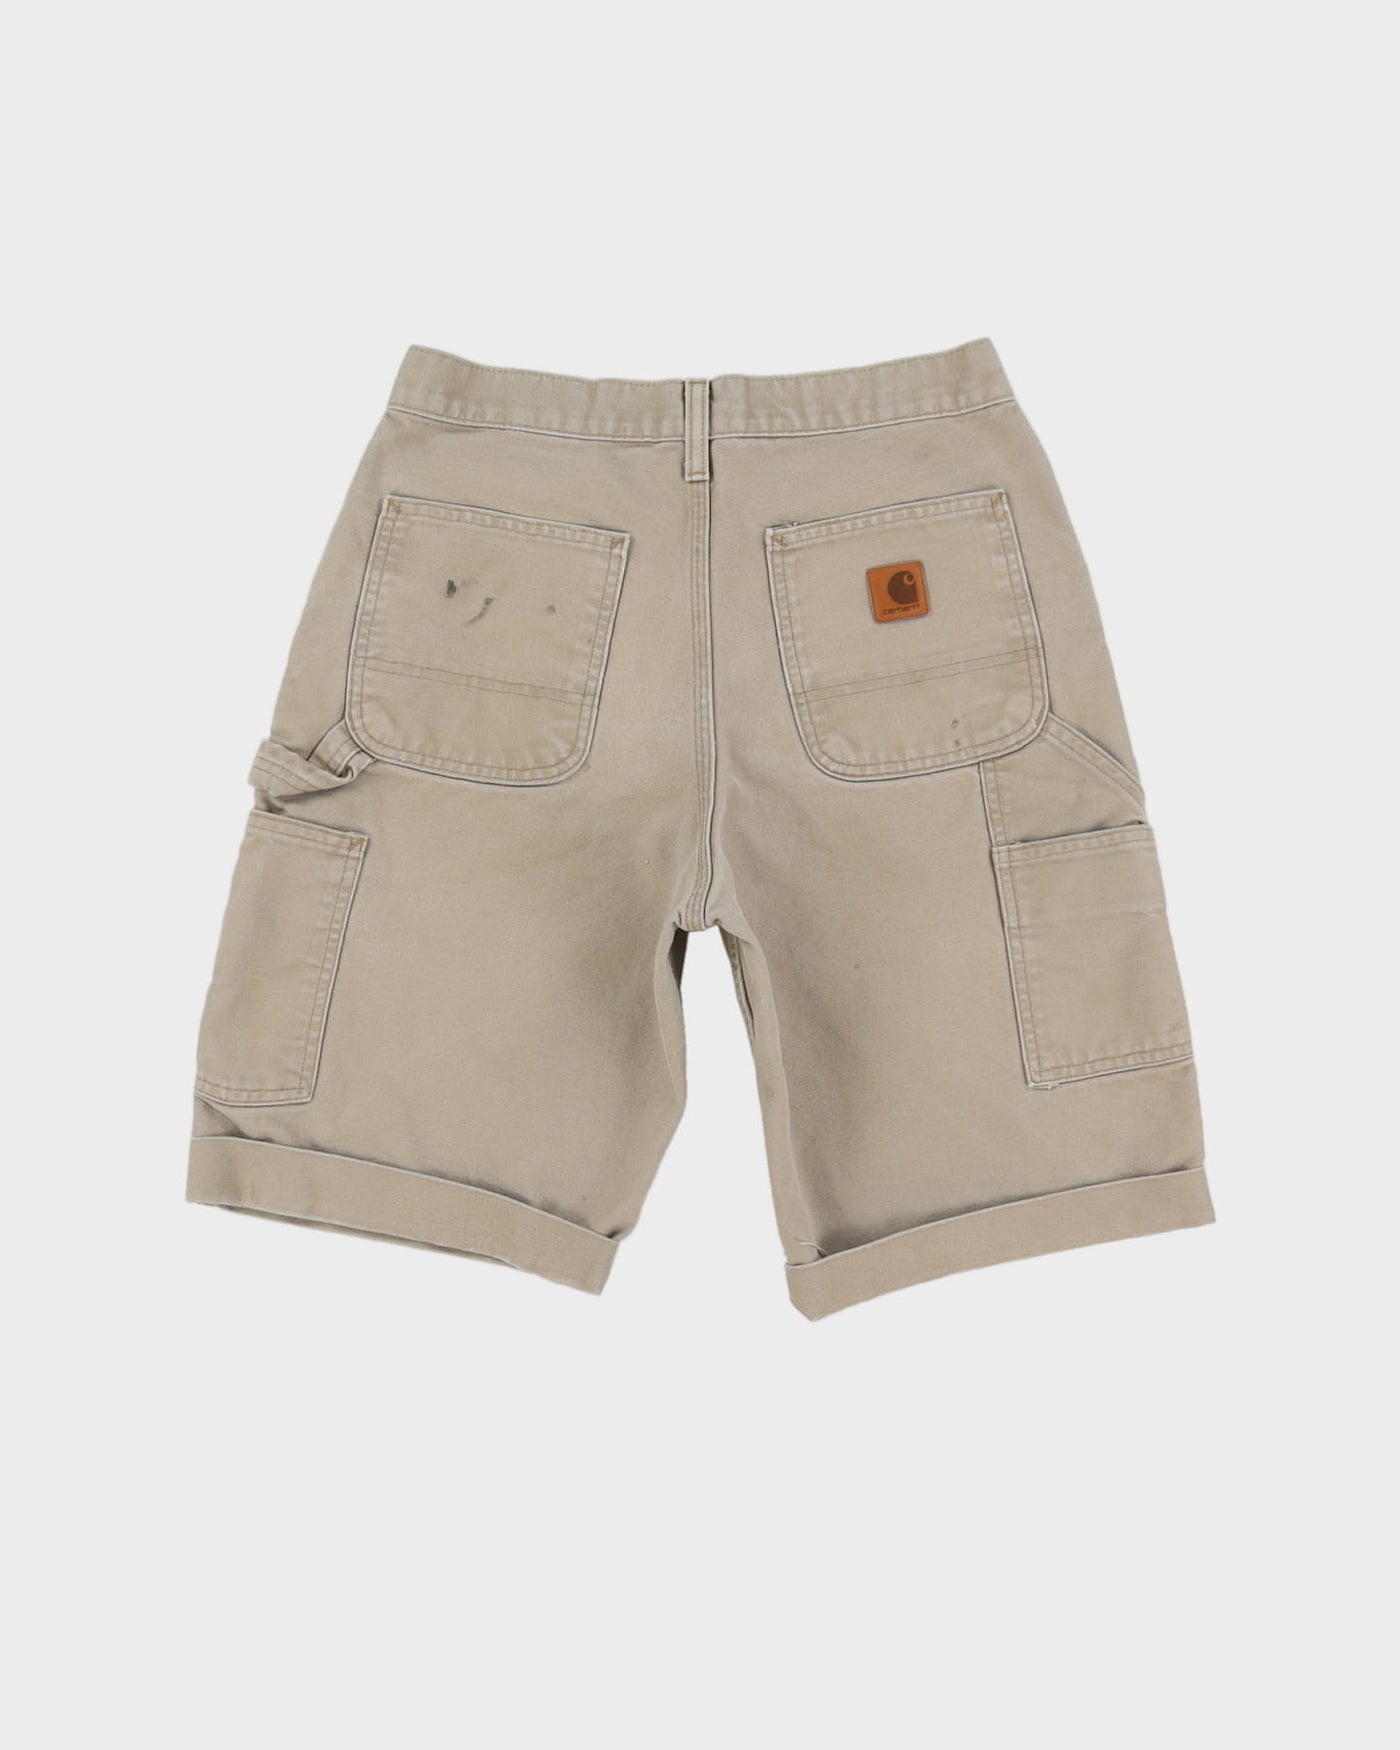 Carhartt Beige Workwear Shorts - W30